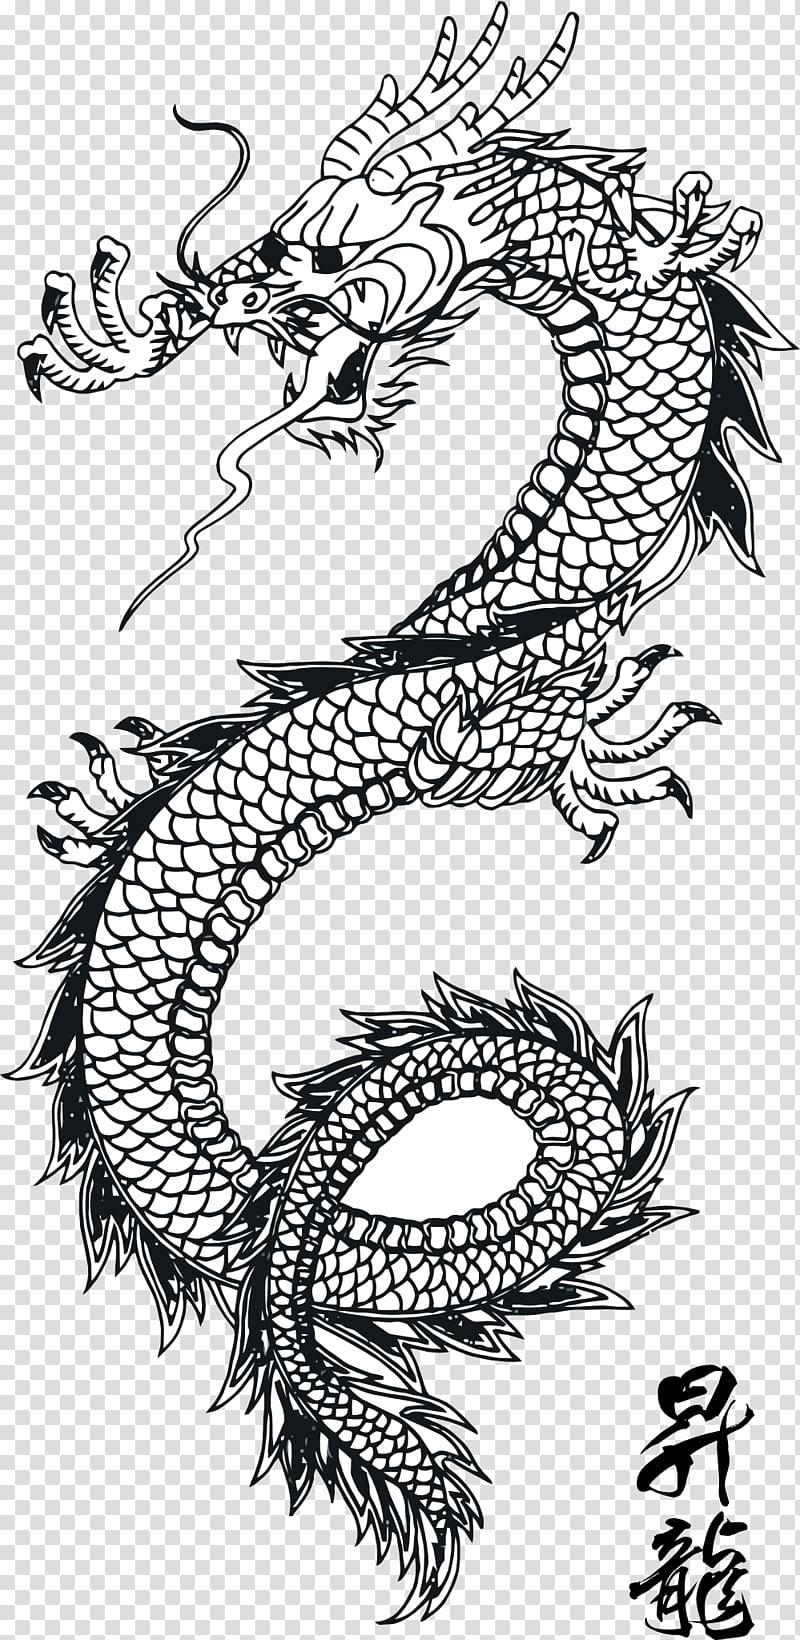 Japanese dragon Japanese art Chinese dragon, Black Tattoo Dragon s, dragon illustration transparent background PNG clipart